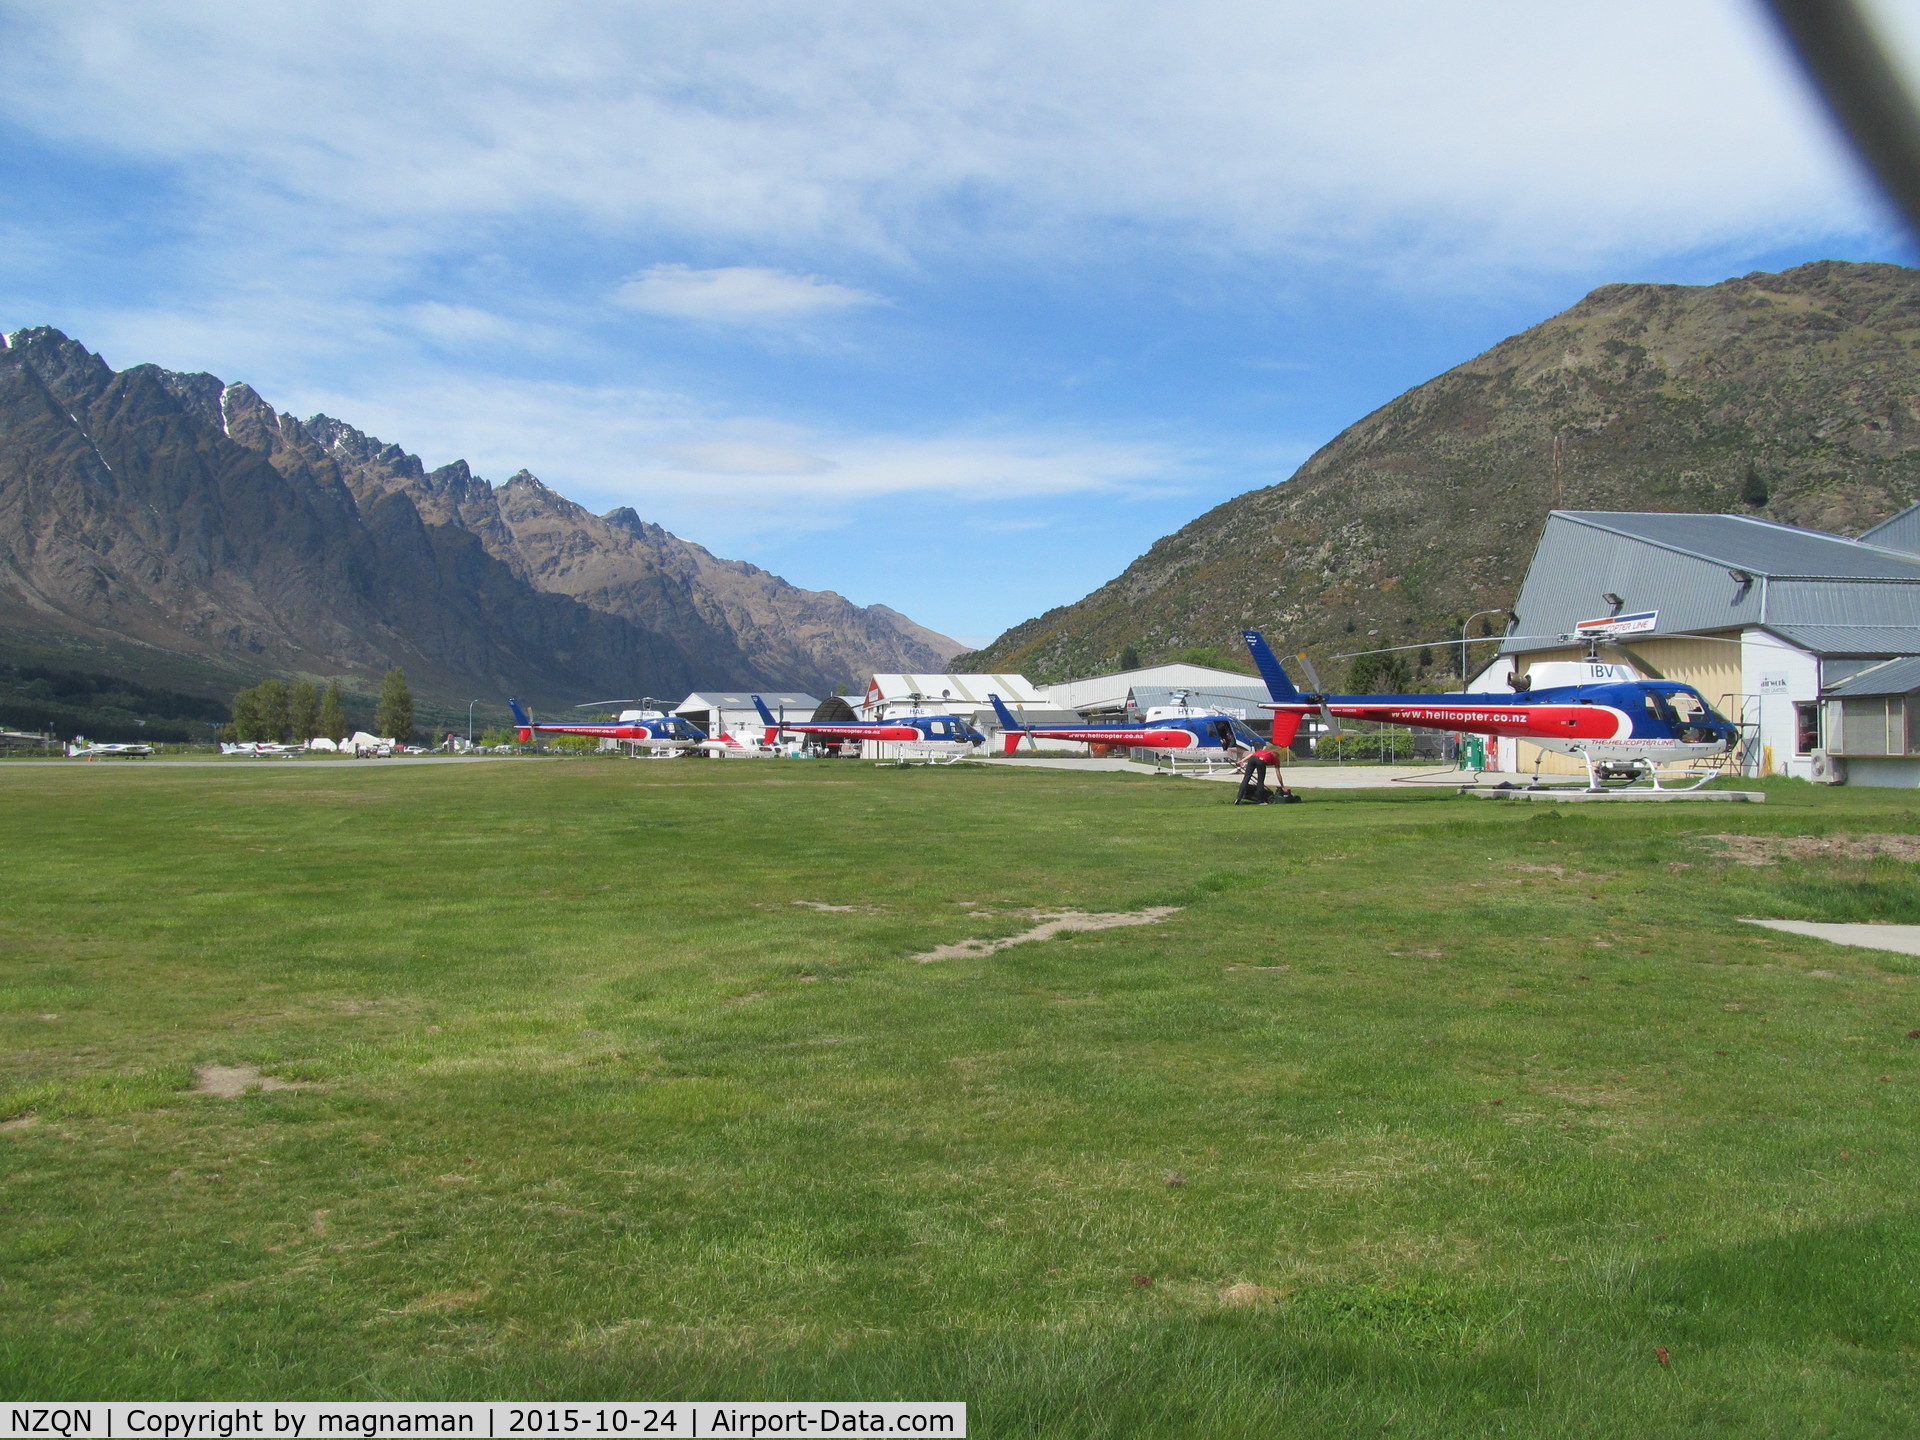 Queenstown Airport, Queenstown New Zealand (NZQN) - lovely airfield